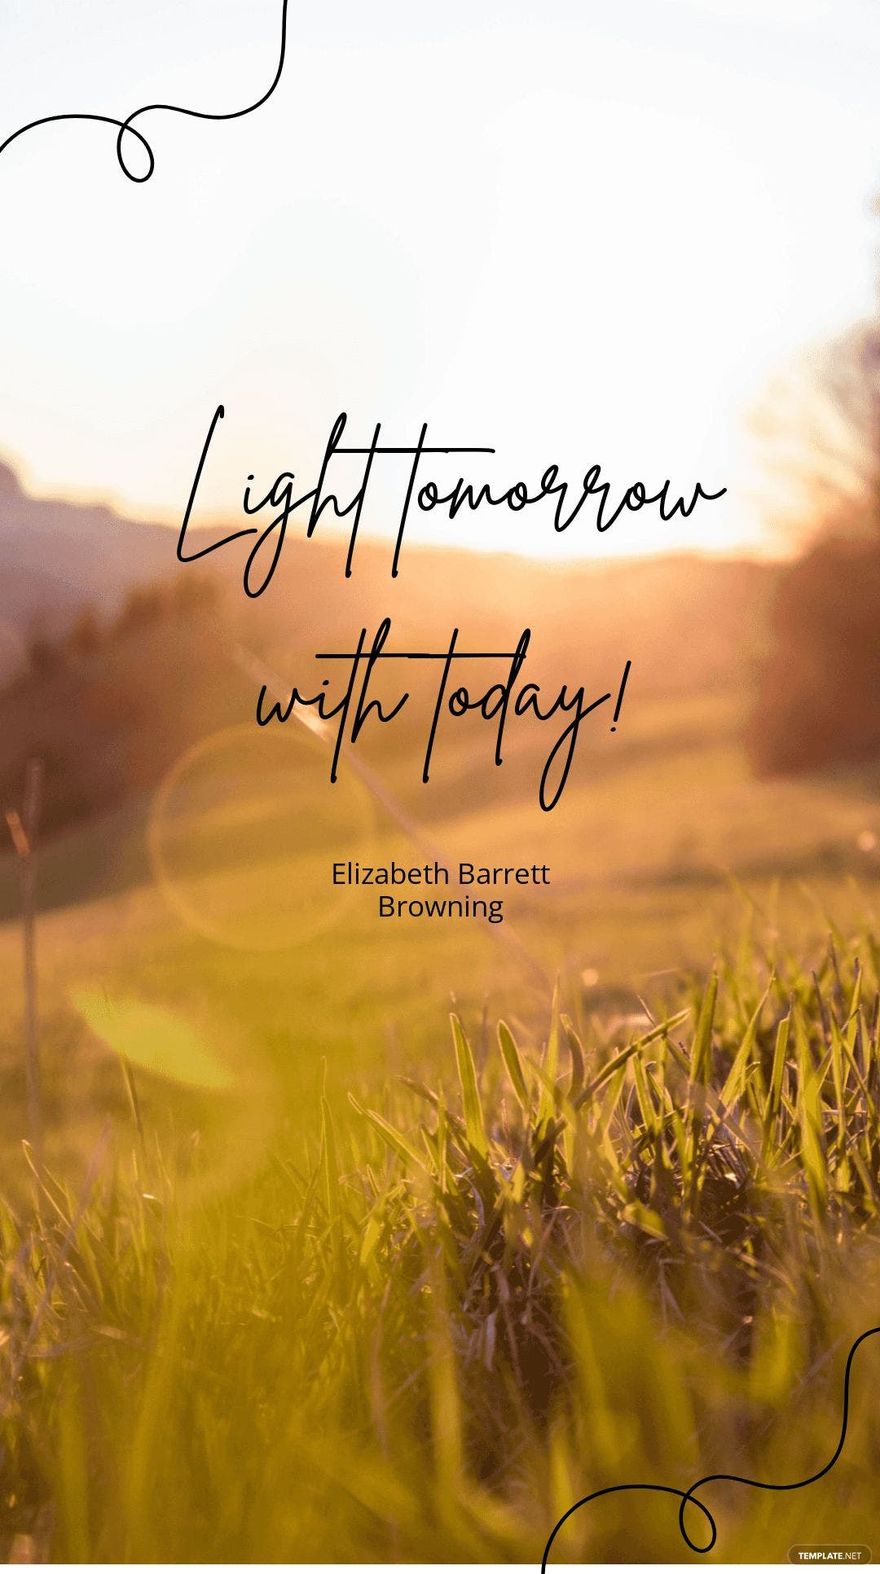 Elizabeth Barrett Browning - Light tomorrow with today!